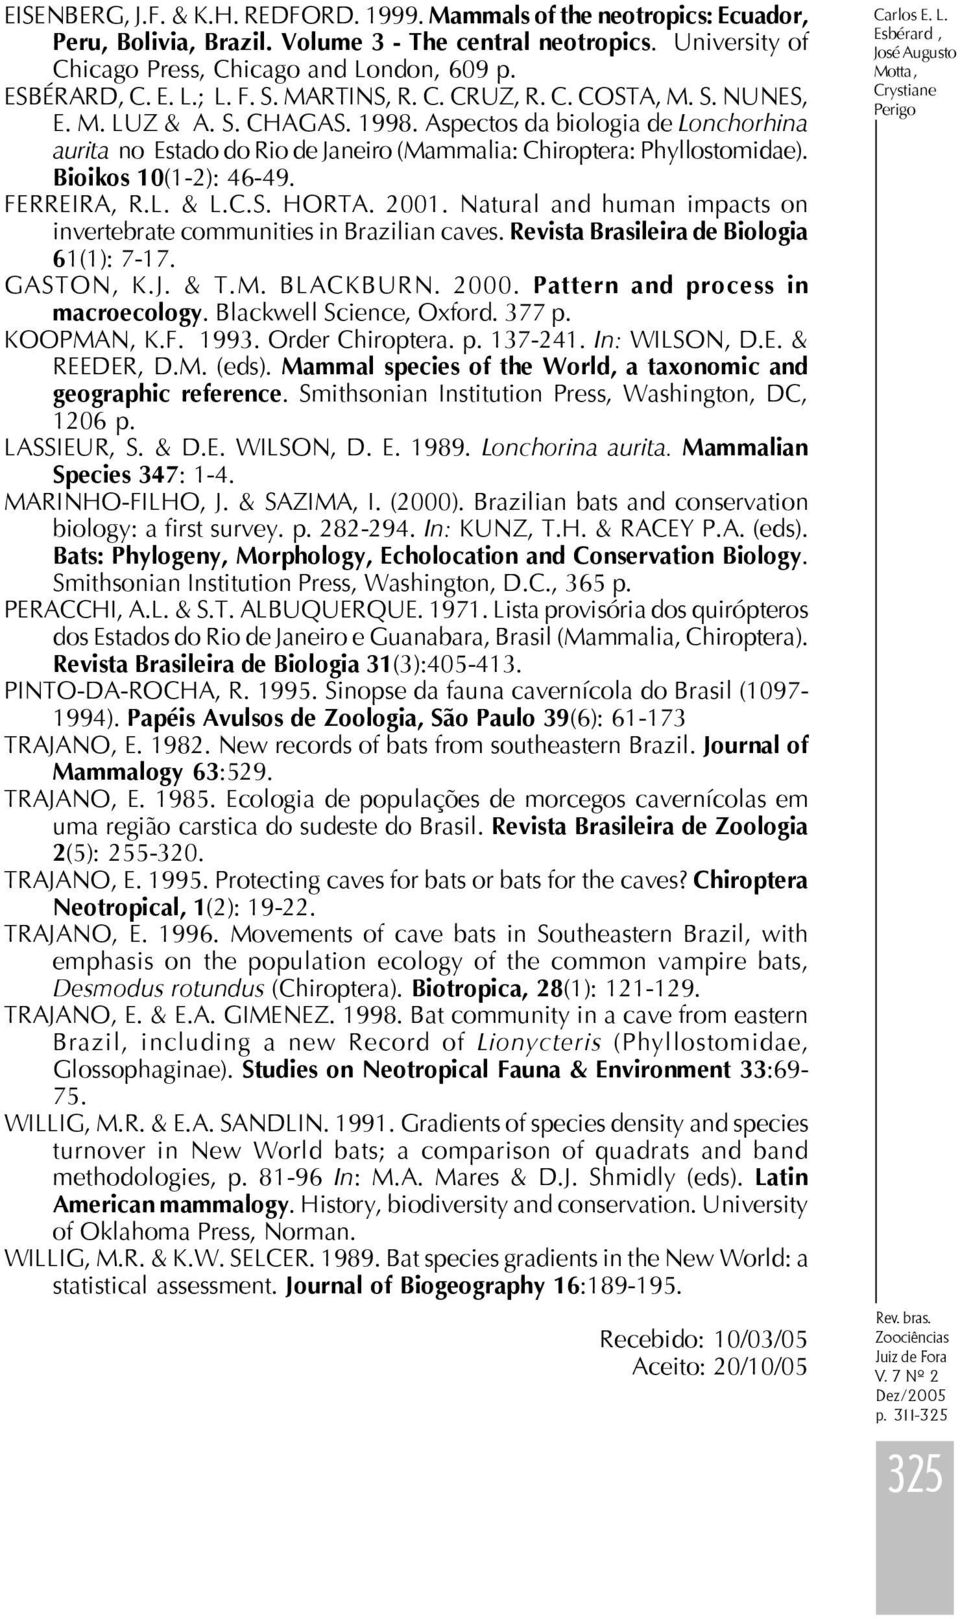 Bioikos (-): -9. FERREIRA, R.L. & L.C.S. HORTA.. Natural and human impacts on invertebrate communities in Brazilian caves. Revista Brasileira de Biologia (): -. GASTON, K.J. & T.M. BLACKBURN.